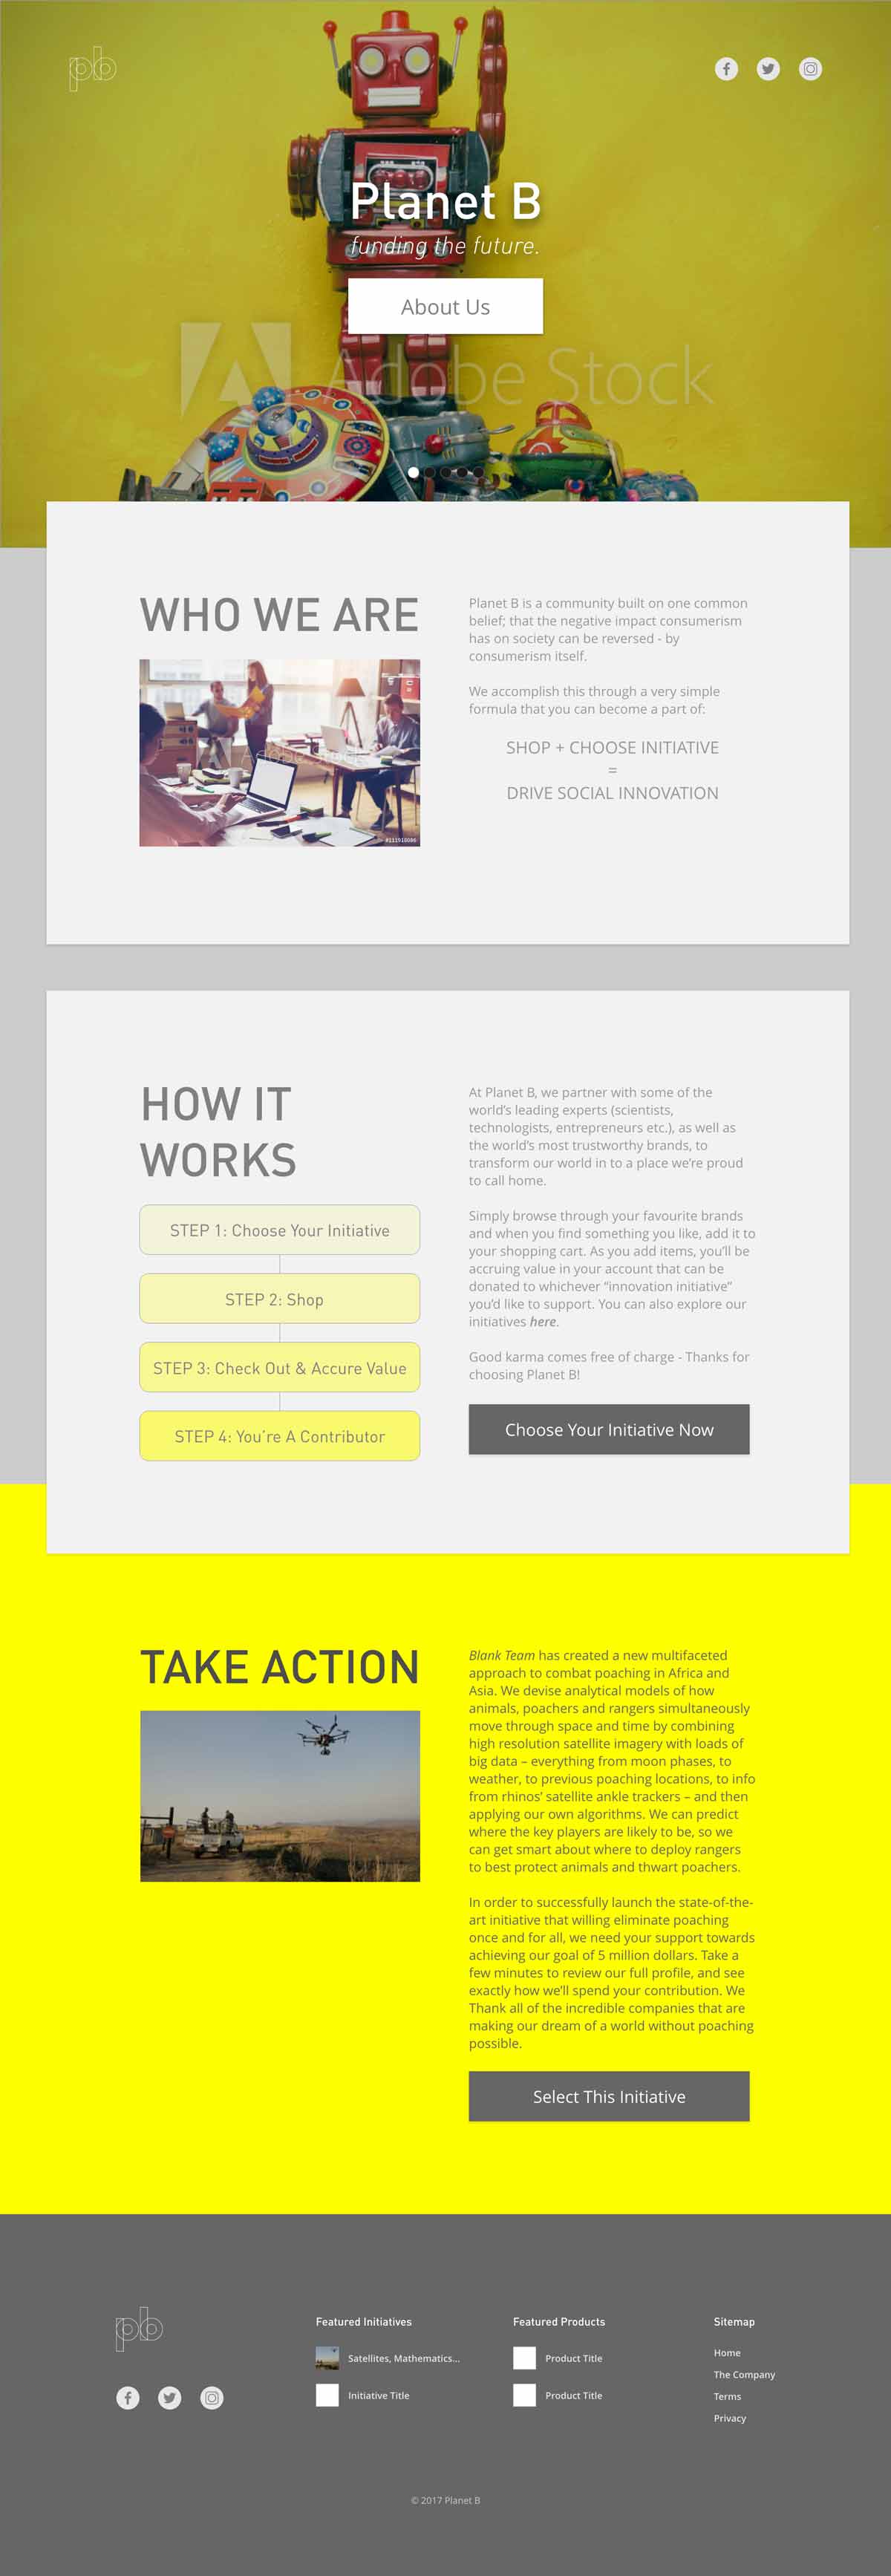 Planet B Website Design Mockup Draft - Impact